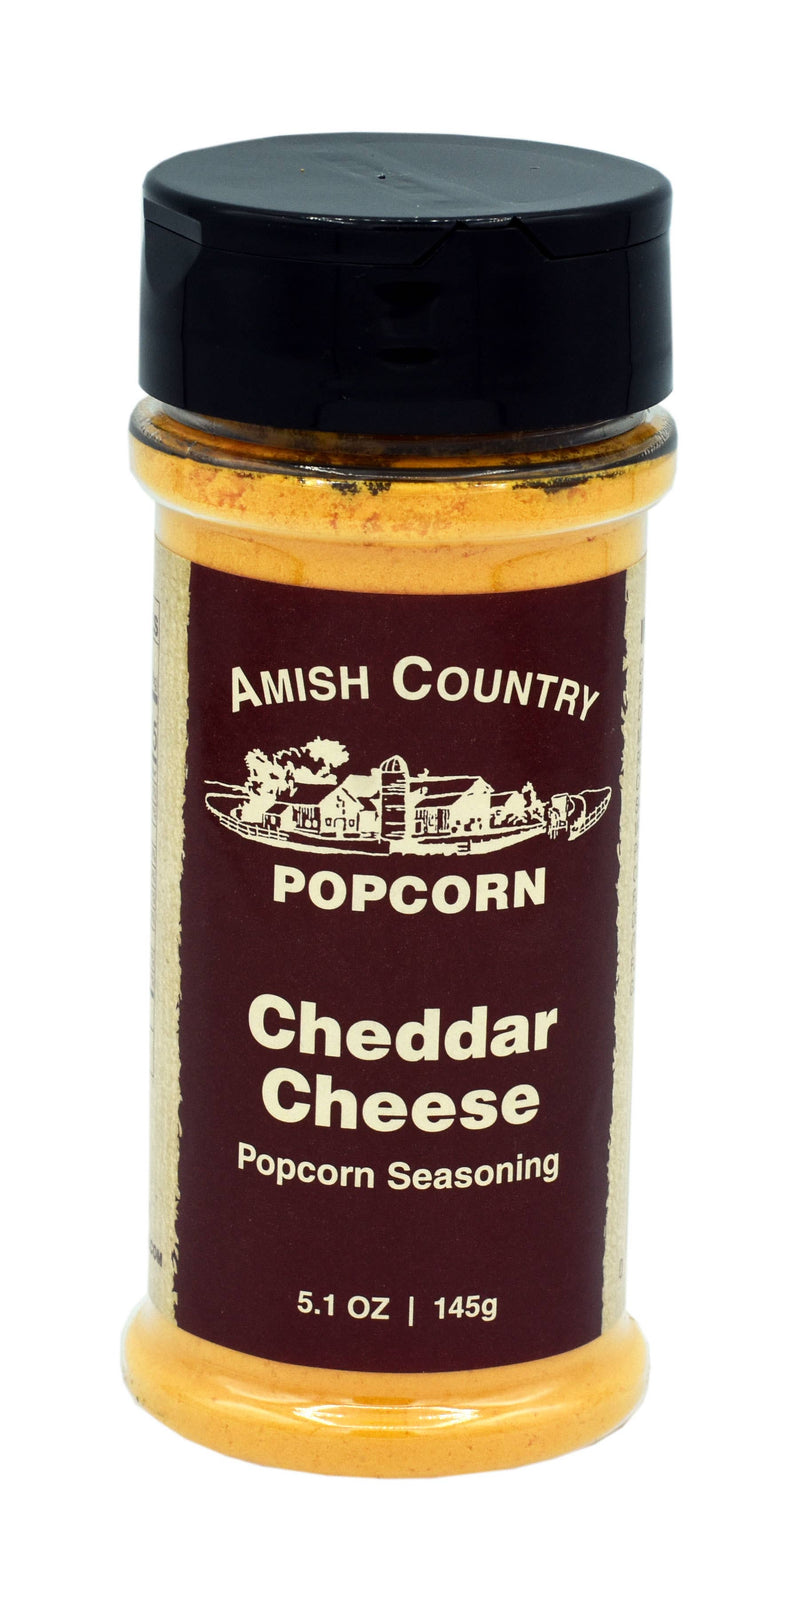 Amish Country Popcorn - Cheddar Cheese Popcorn Seasoning